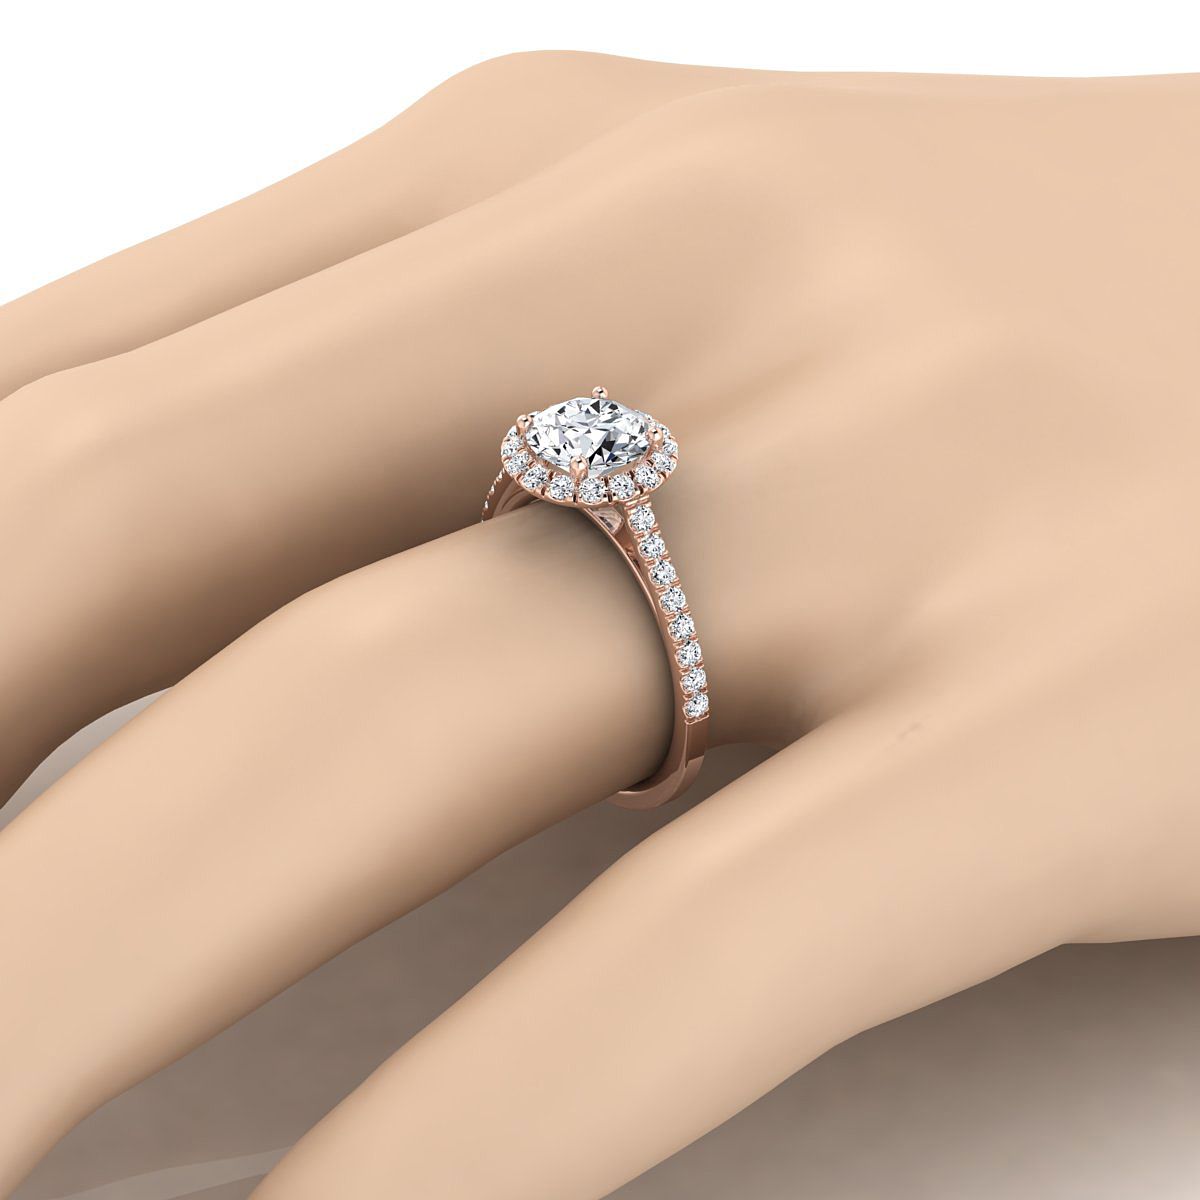 14K Rose Gold Round Brilliant Aquamarine Petite Halo French Diamond Pave Engagement Ring -3/8ctw